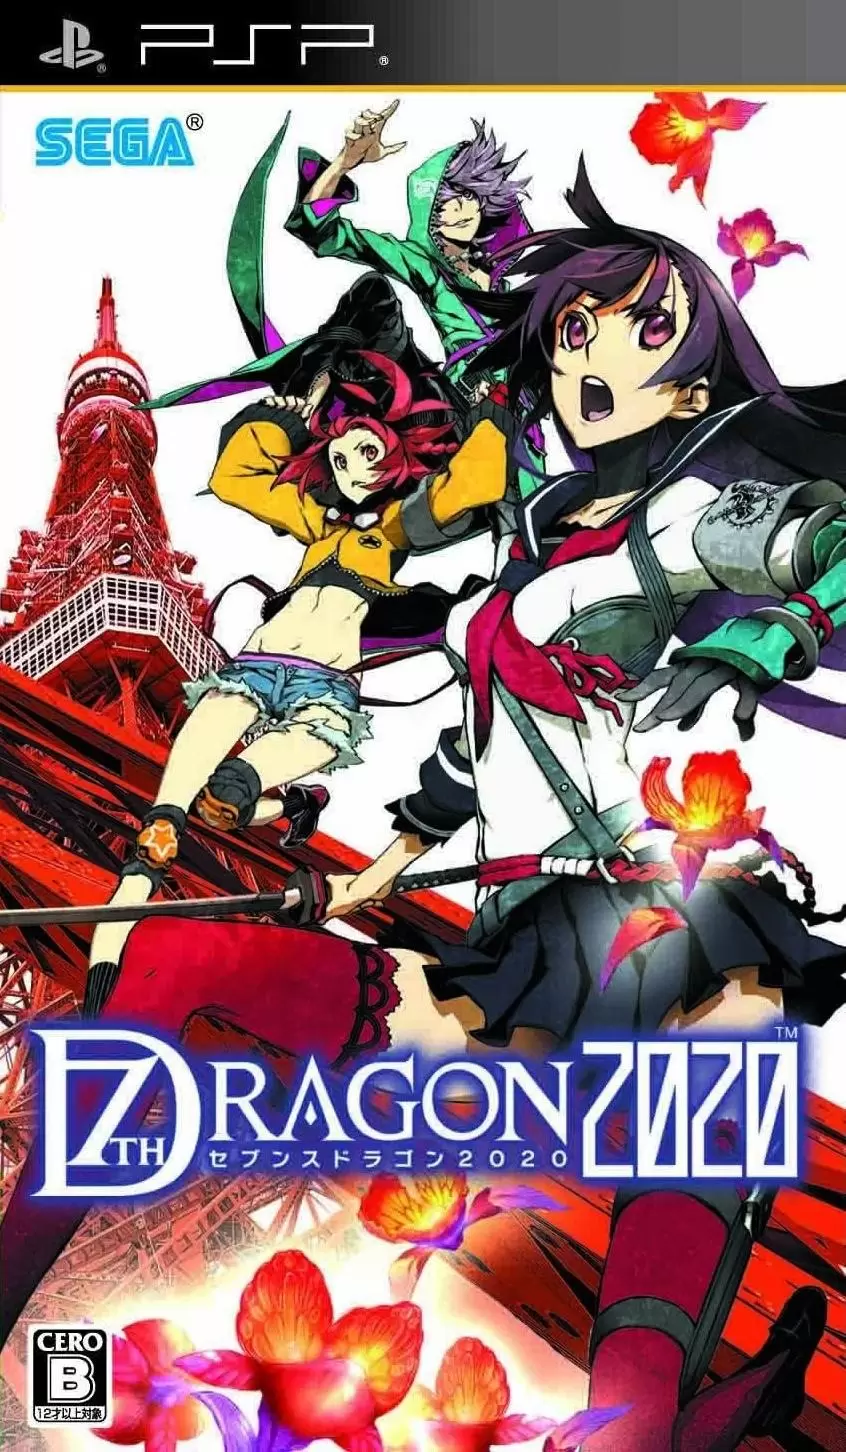 PSP Games - 7th Dragon 2020